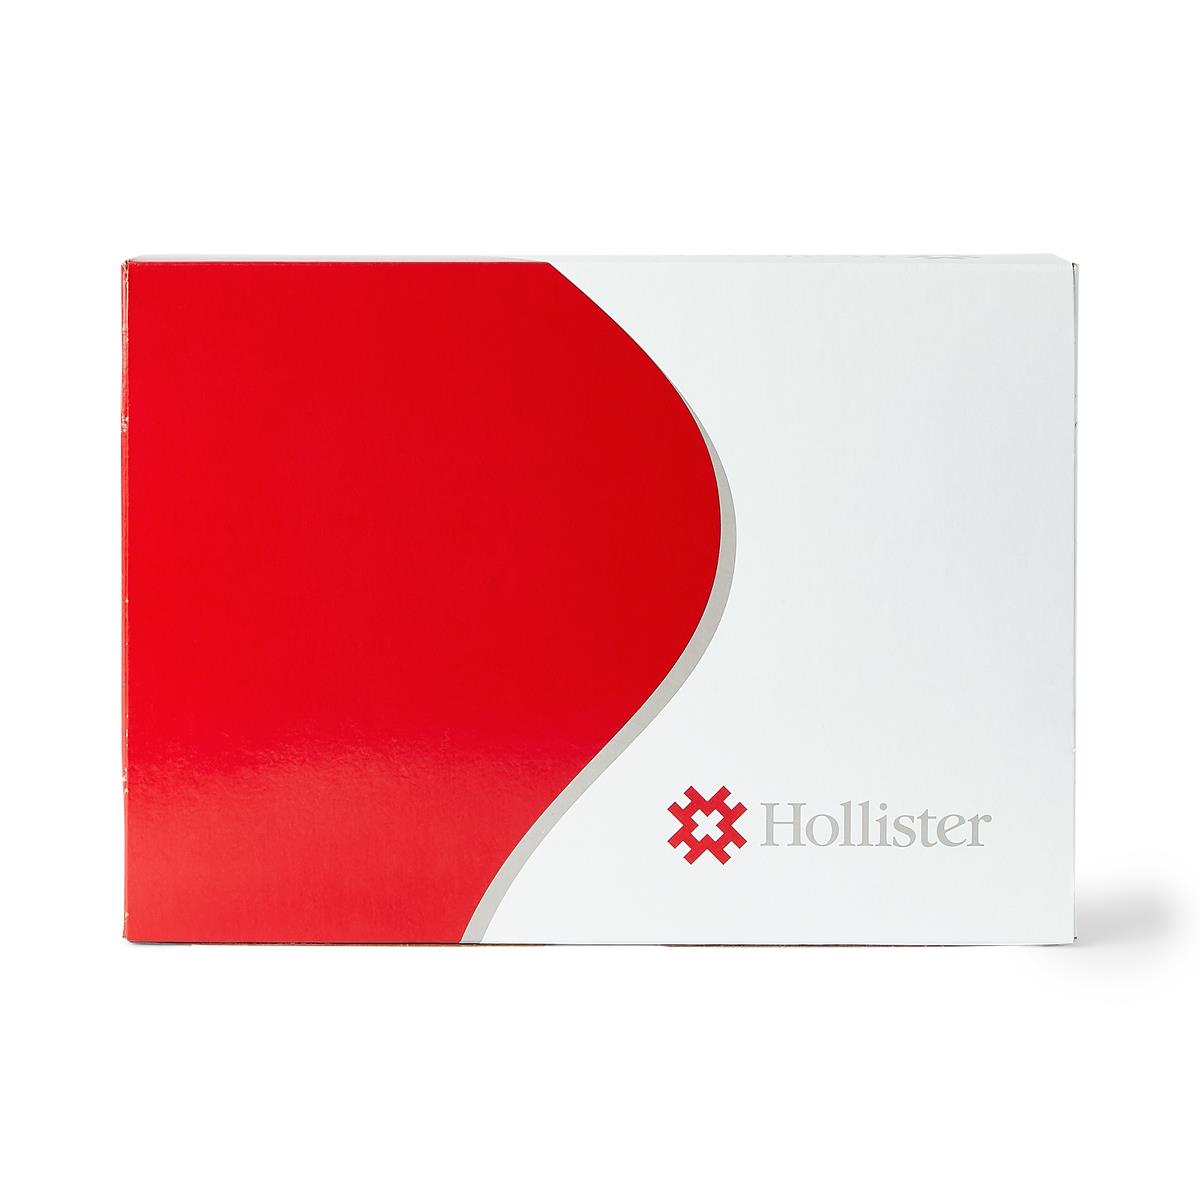 Hollister 11503 New Image CeraPlus™ Precut Ostomy Barrier - Box of 5